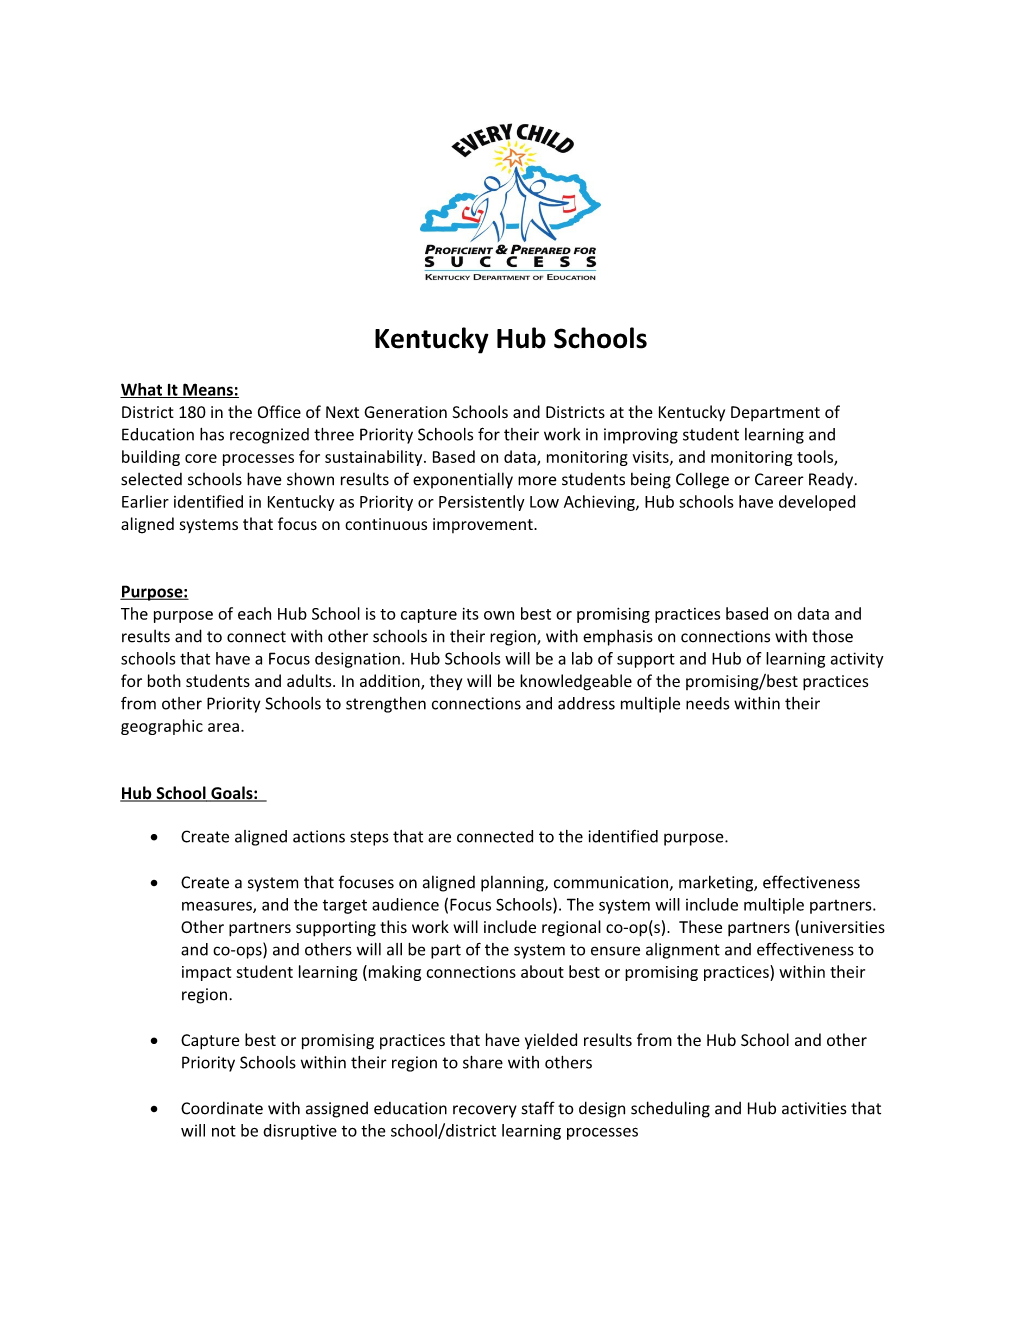 Kentucky Hub Schools Defined